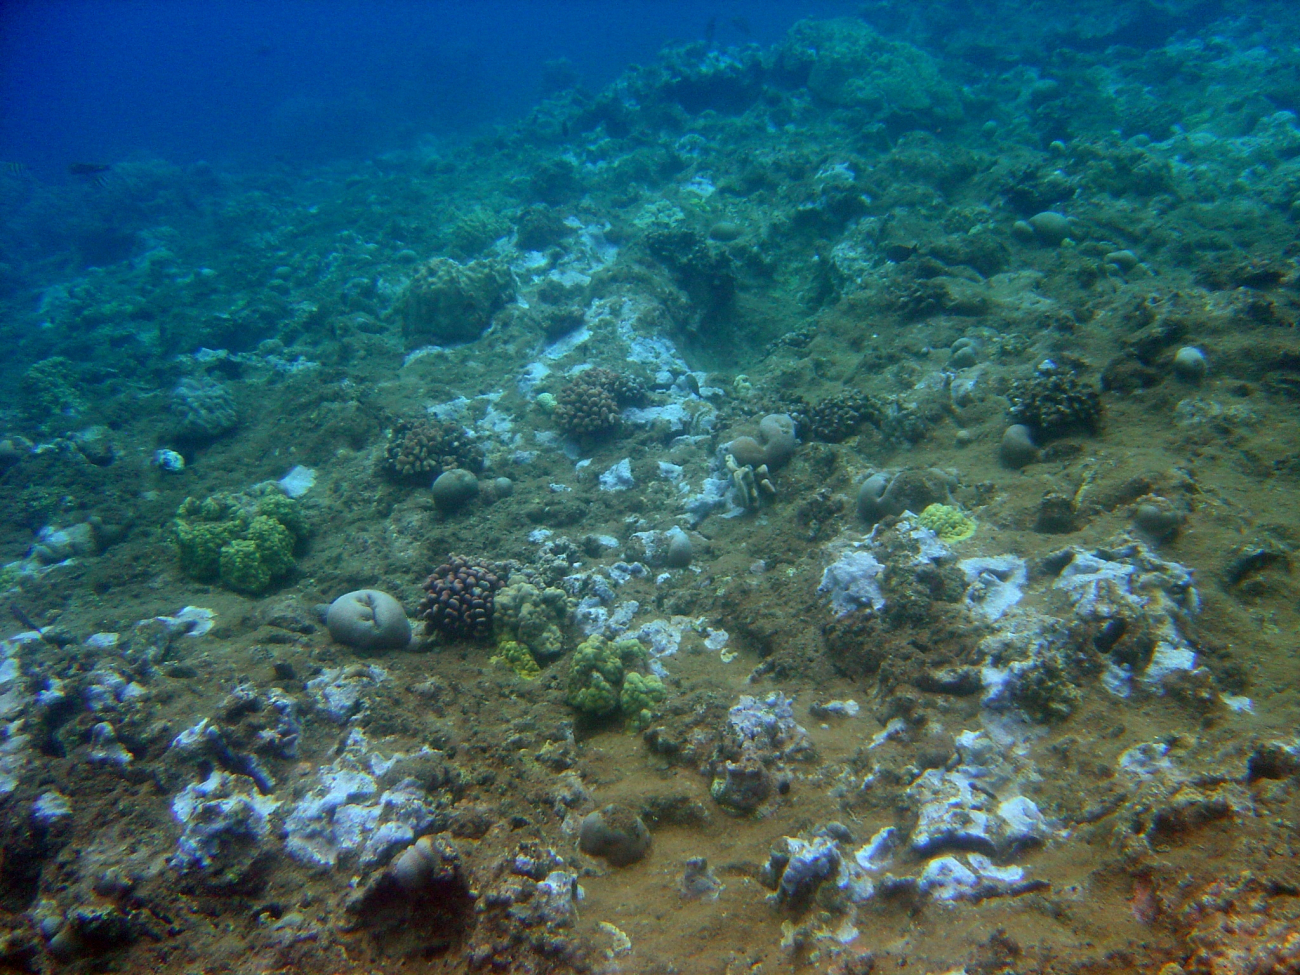 A decimated coral reef area